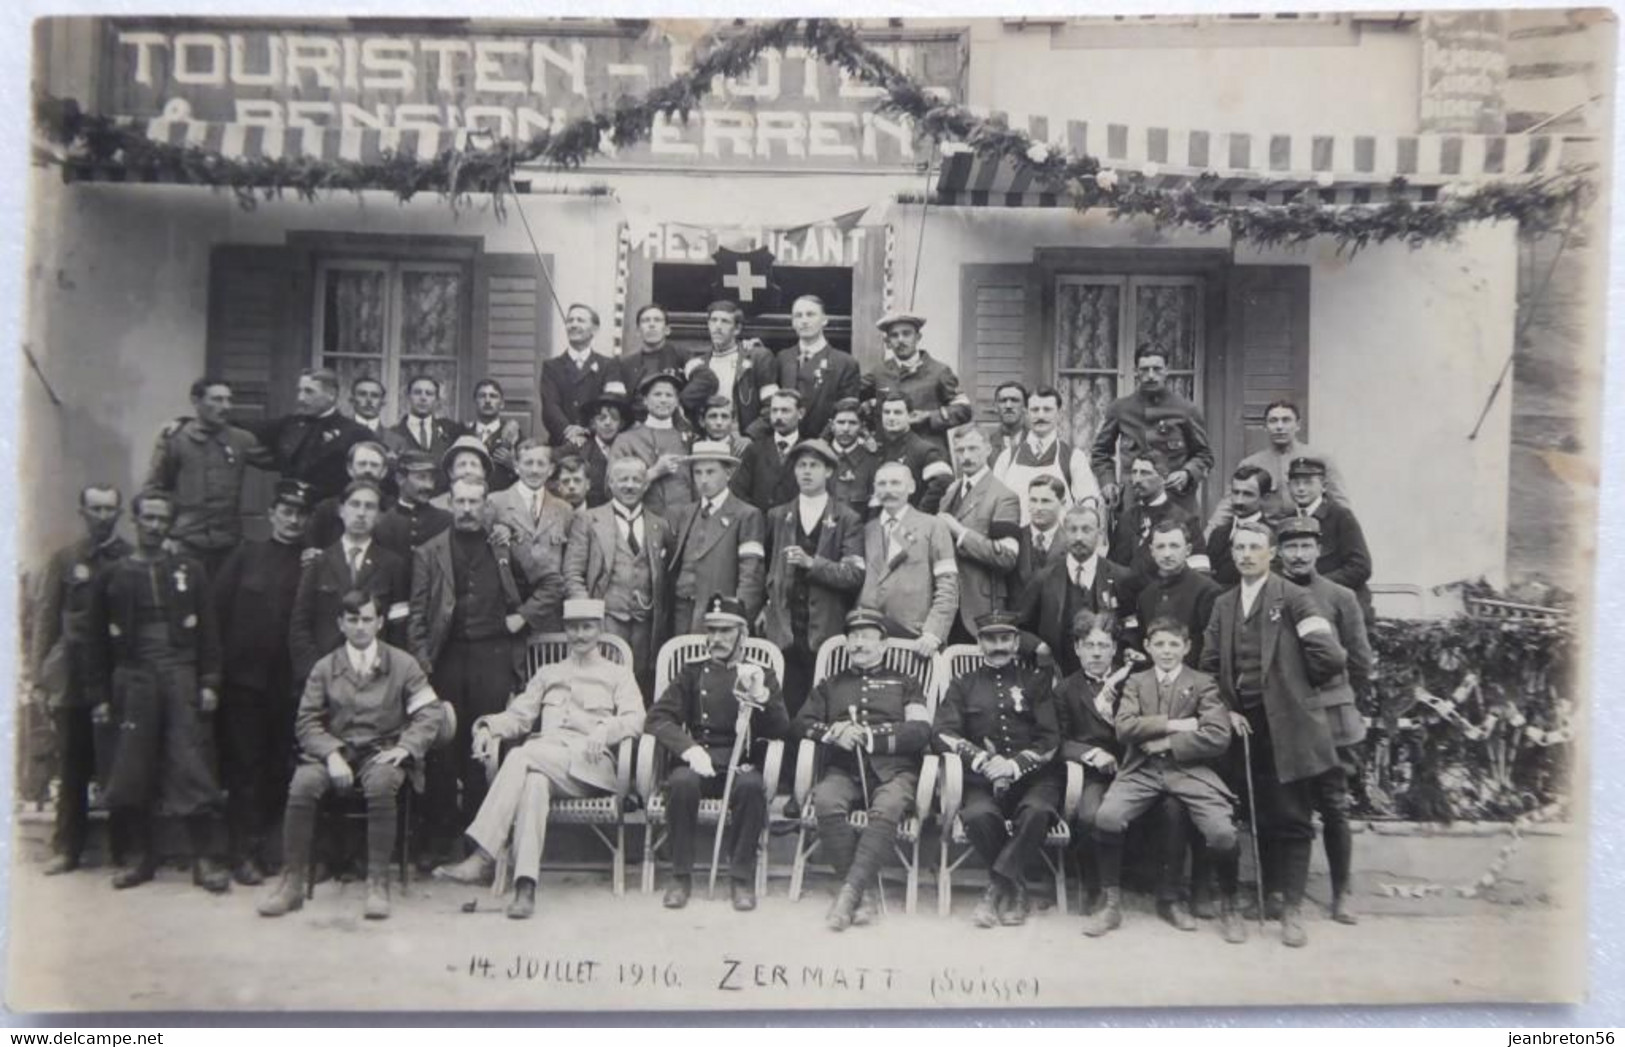 ZERMATT - Touristen-Hotel & Pension Perren - Rare CPA Photo Du 14 Juillet 1916 - Sion